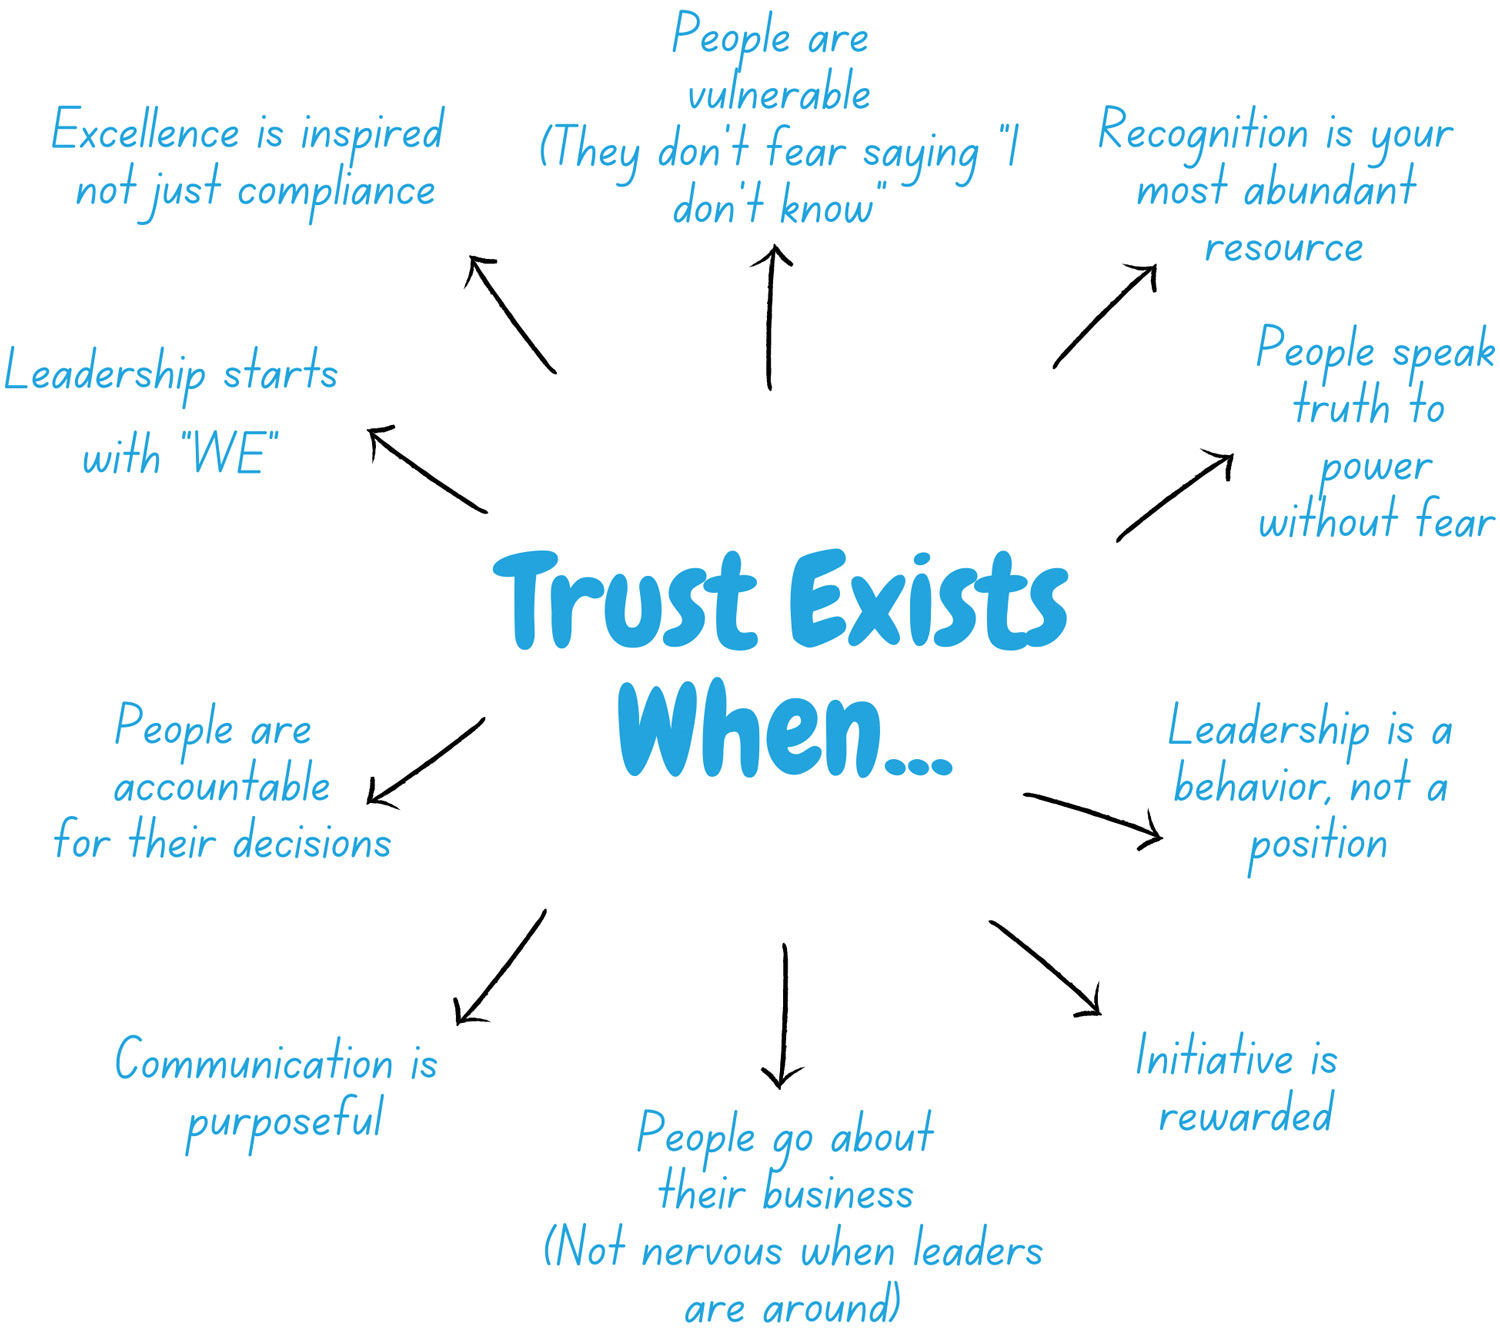 "Trust exists when.." diagram